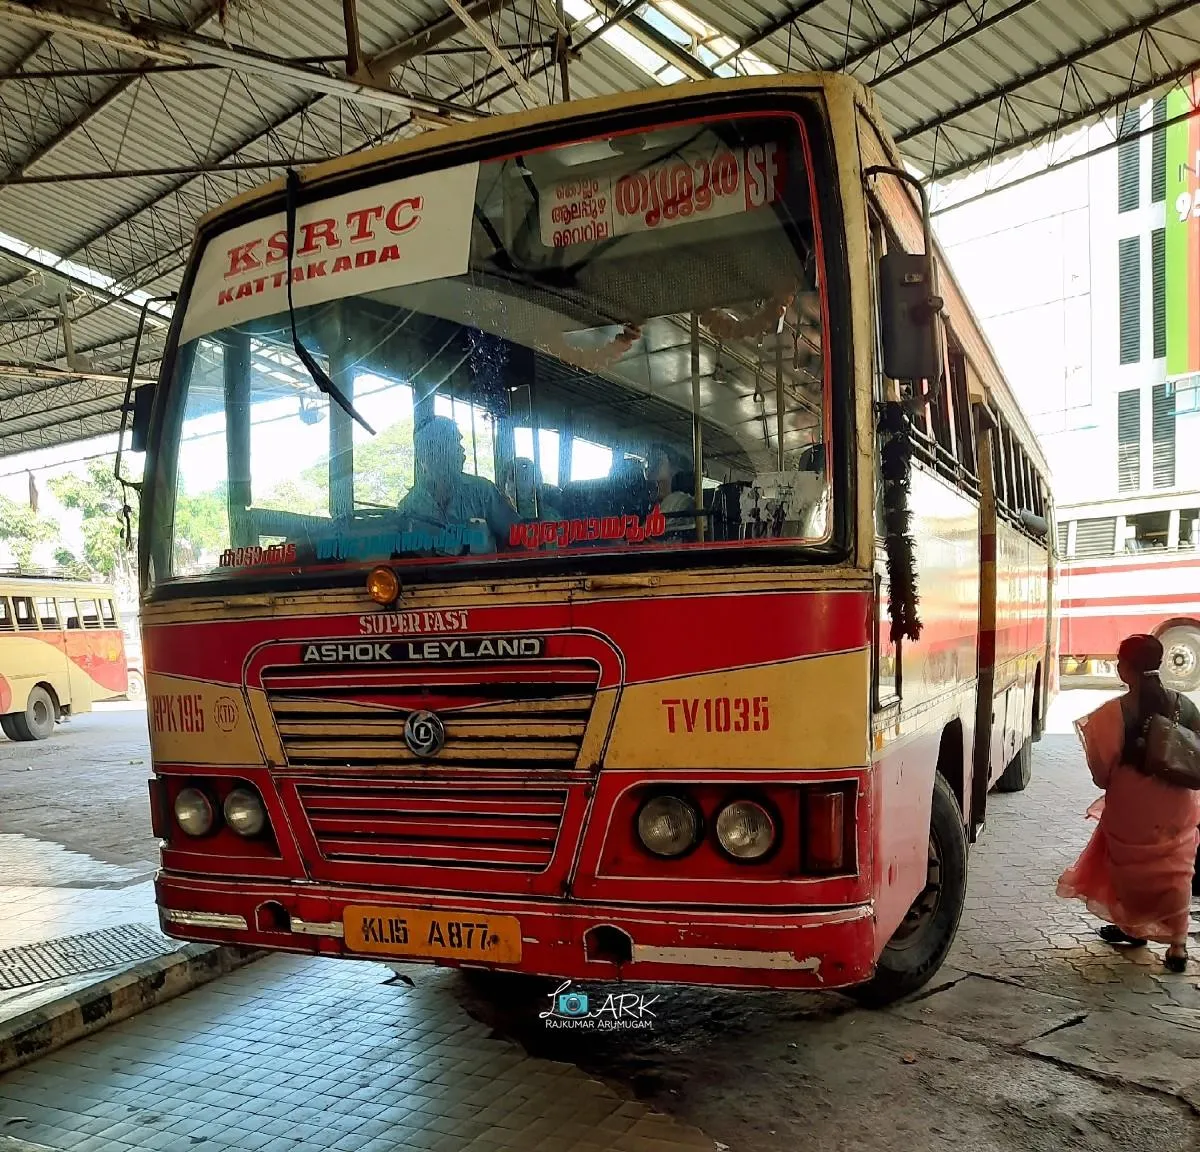 KSRTC RPK 195 Kattakkada - Thrissur Bus Timings